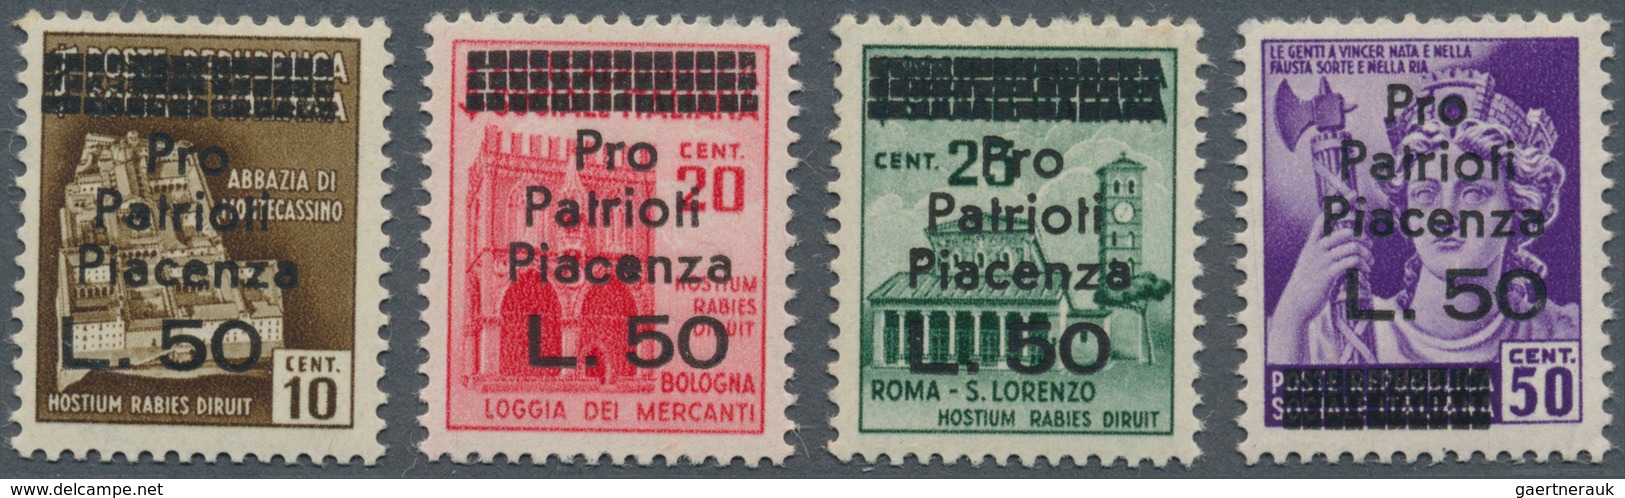 14881 Italien - Besonderheiten: PIANCENZA (Local Post): 1945, 4 Items With Overprint "Pro Patrioti Piacenz - Non Classés